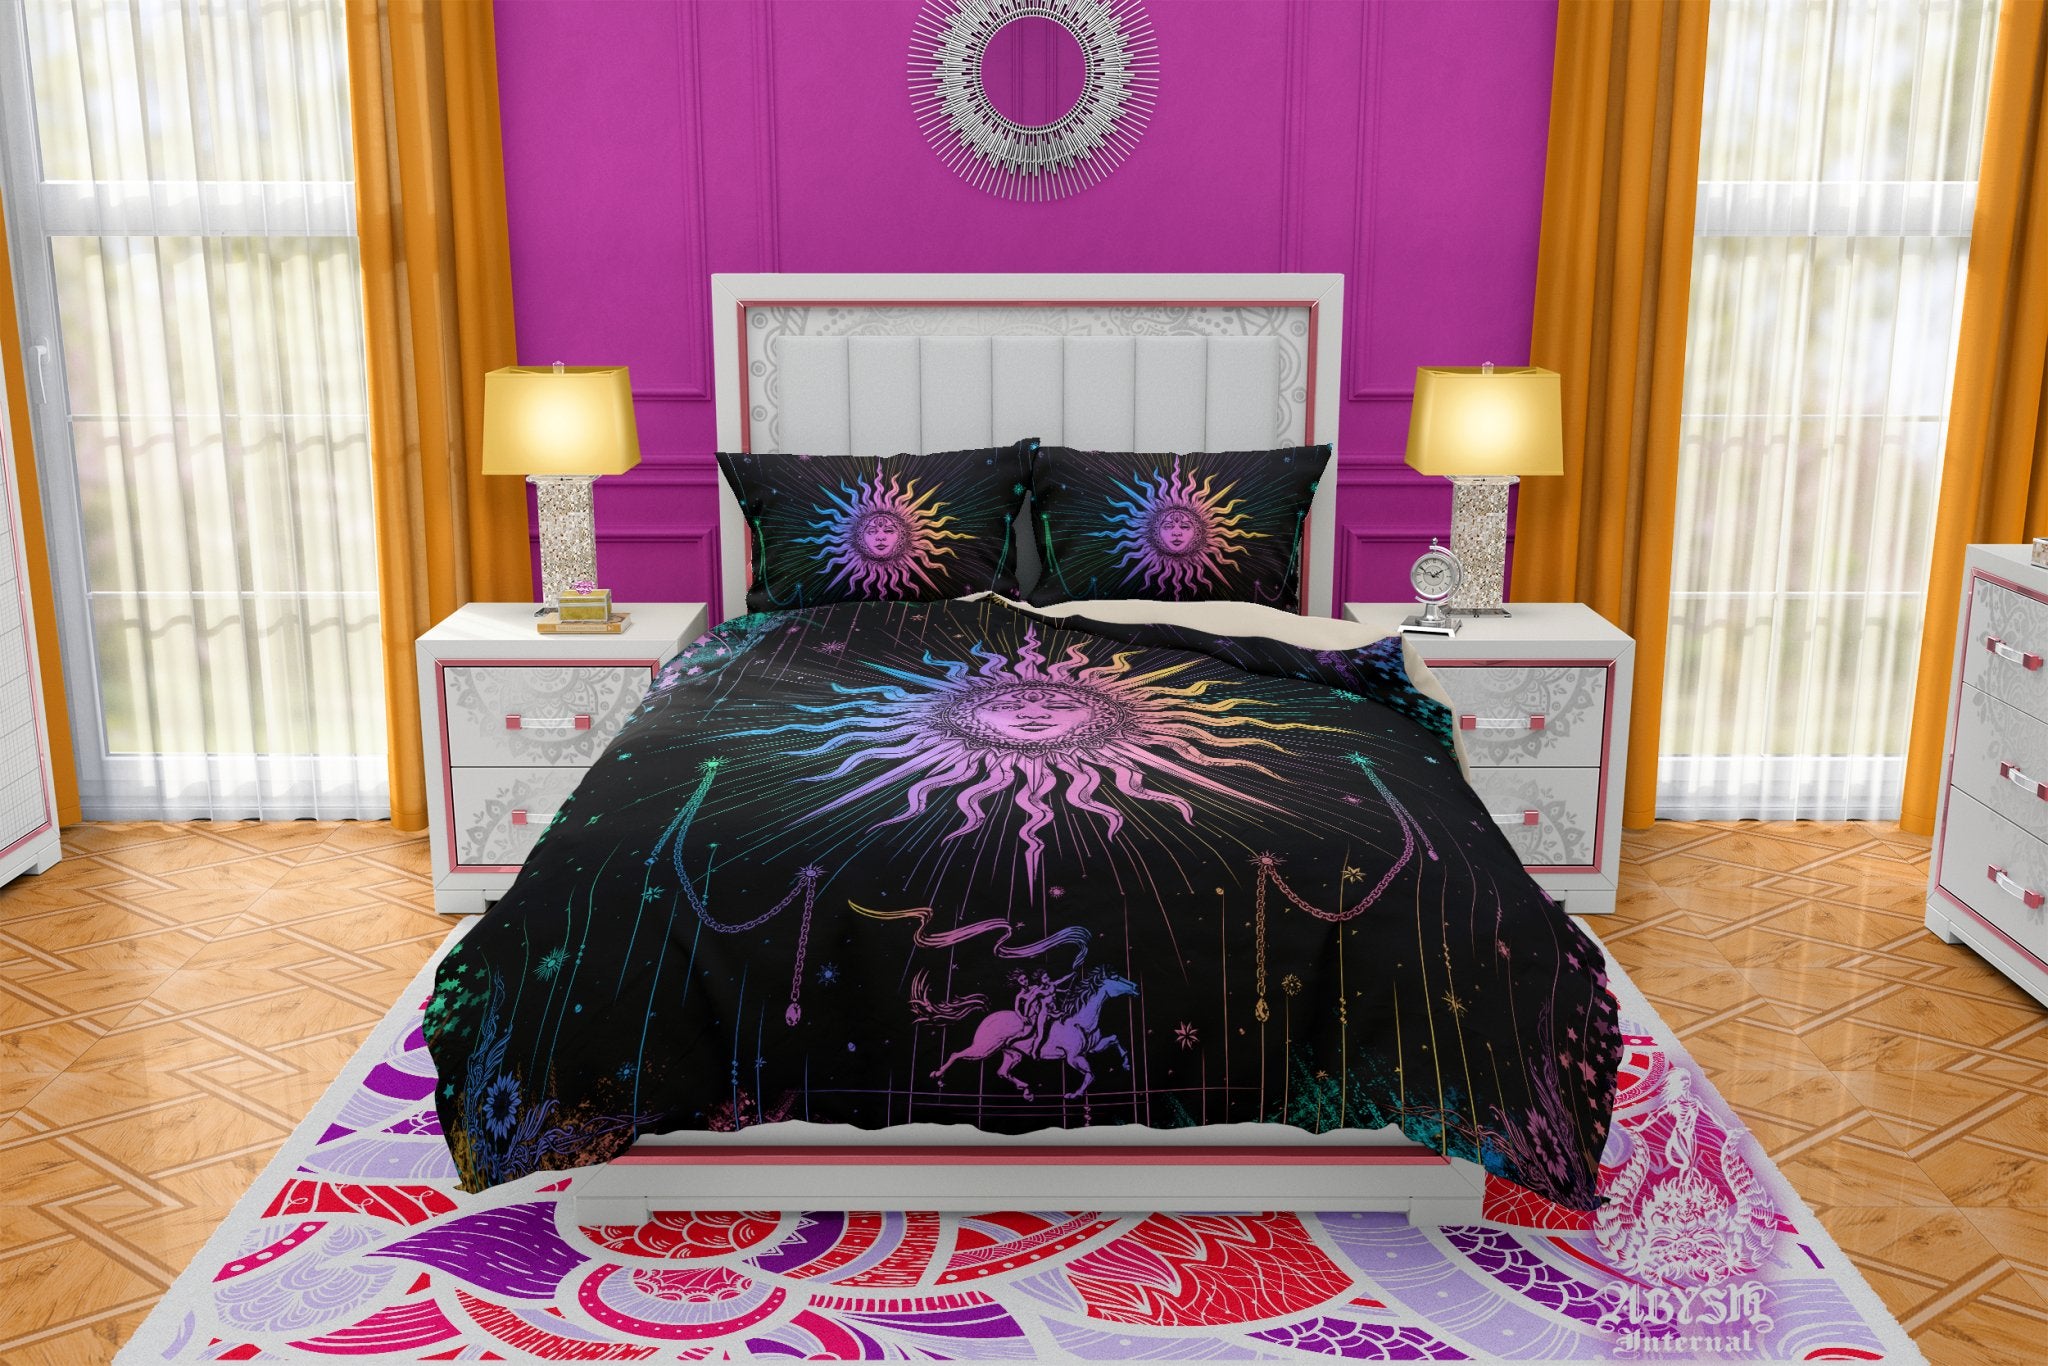 Pastel Sun Duvet Cover, Bed Covering, Trippy Comforter, Kids Bedroom Decor King, Queen & Twin Bedding Set - Tarot Arcana Art, Dark - Abysm Internal